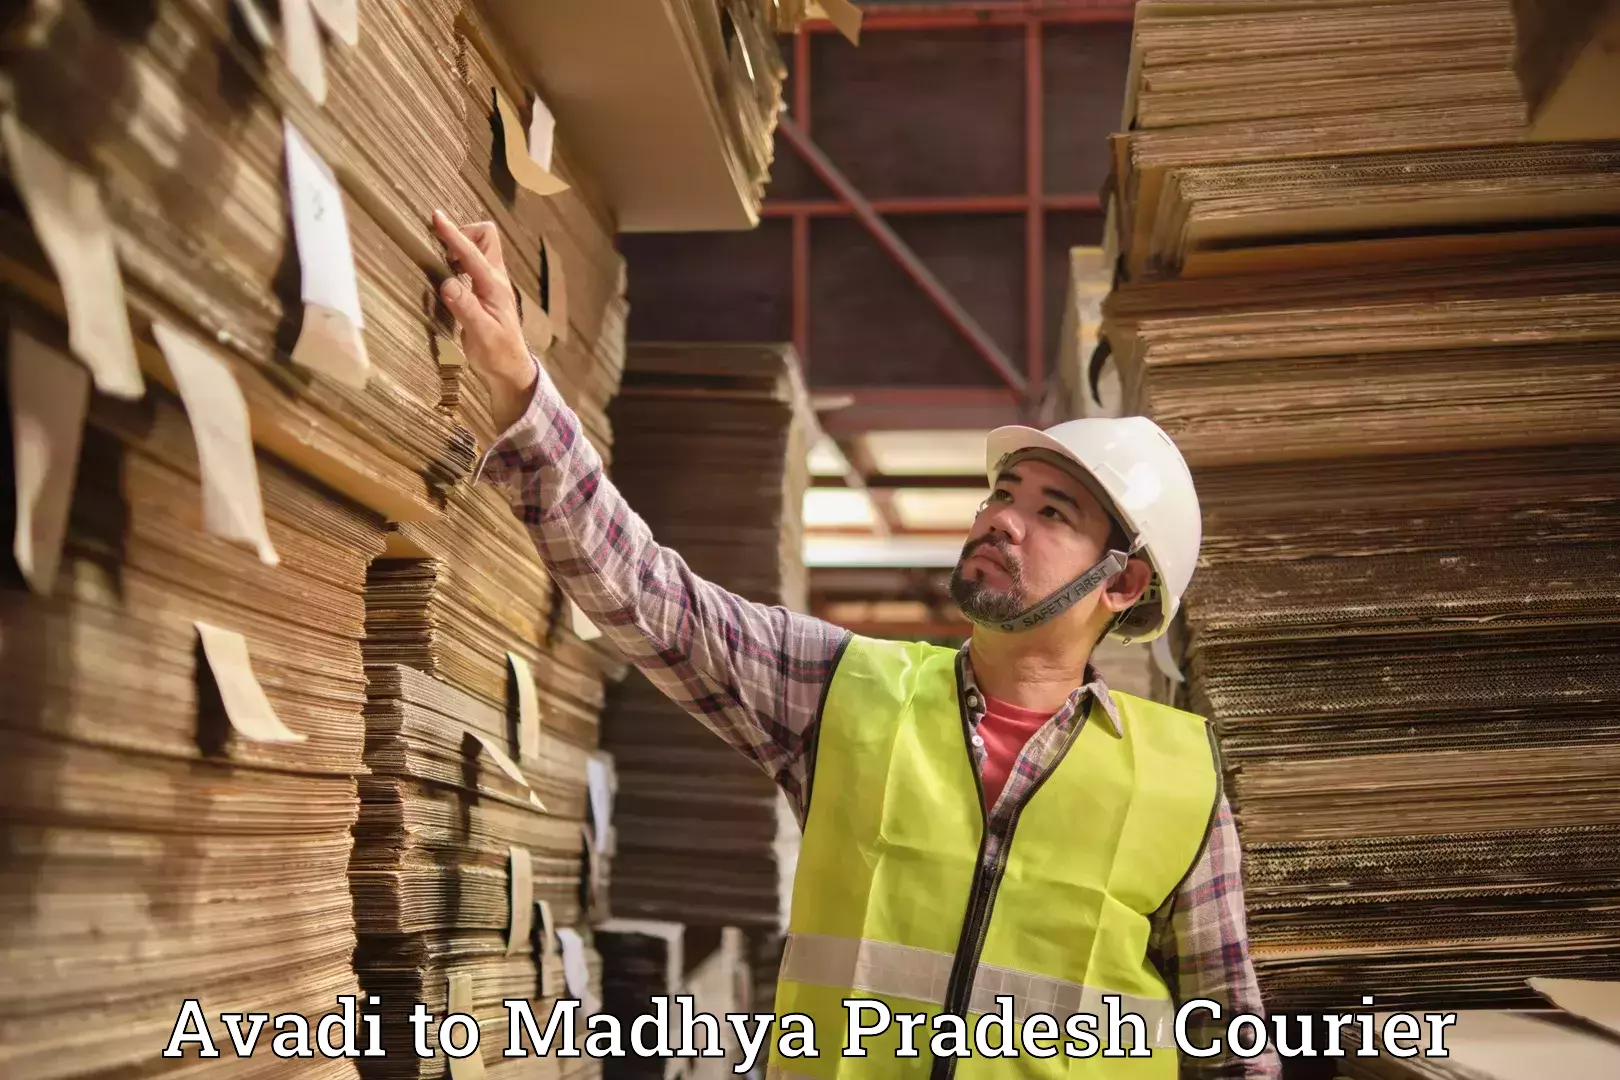 Luggage shipment specialists Avadi to Madhya Pradesh